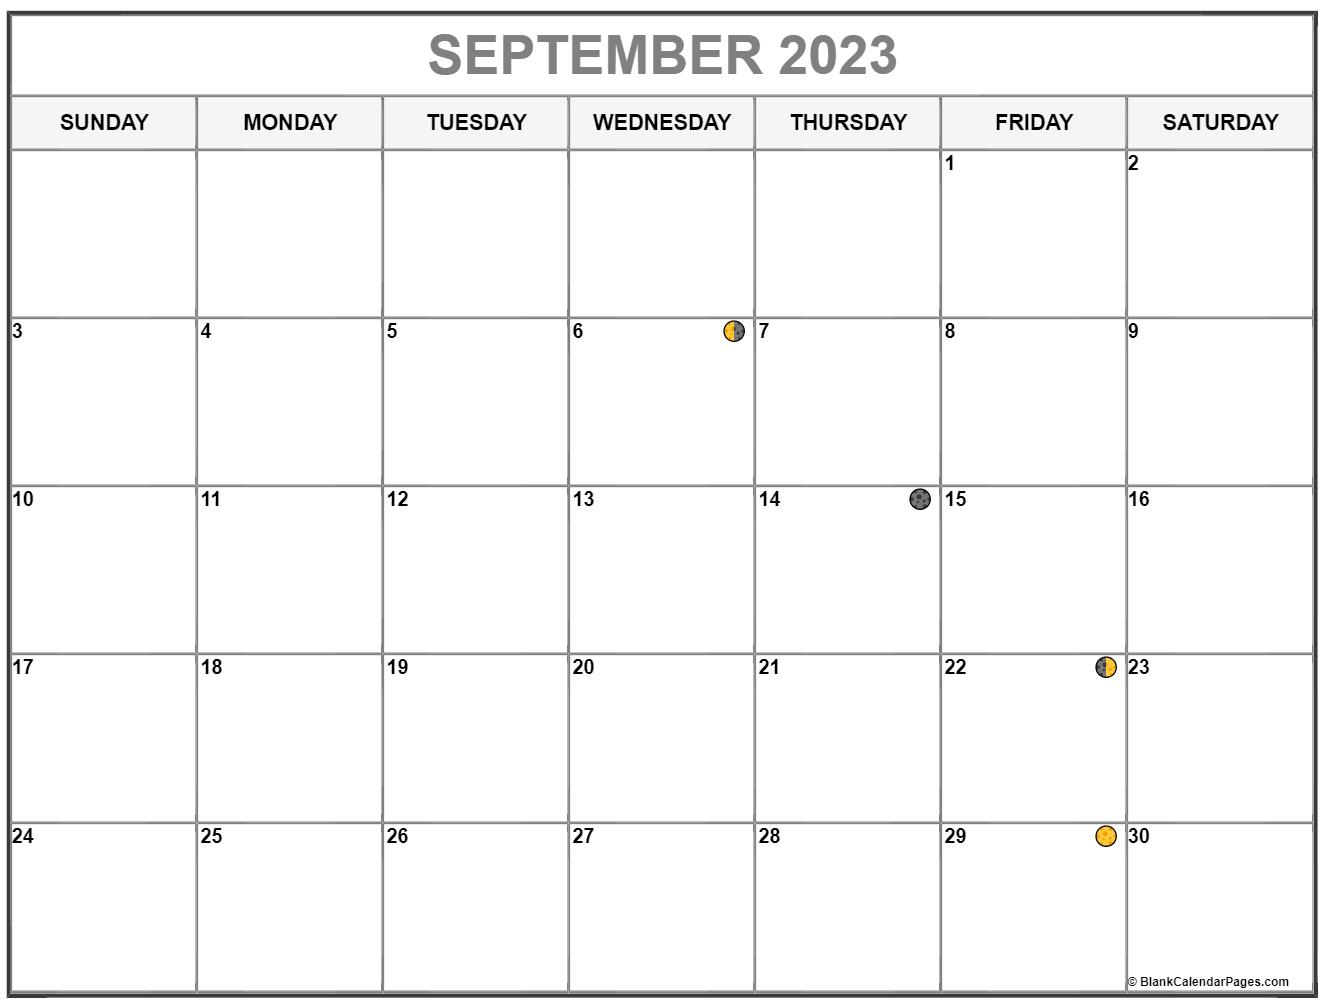 september-2023-lunar-calendar-moon-phase-calendar